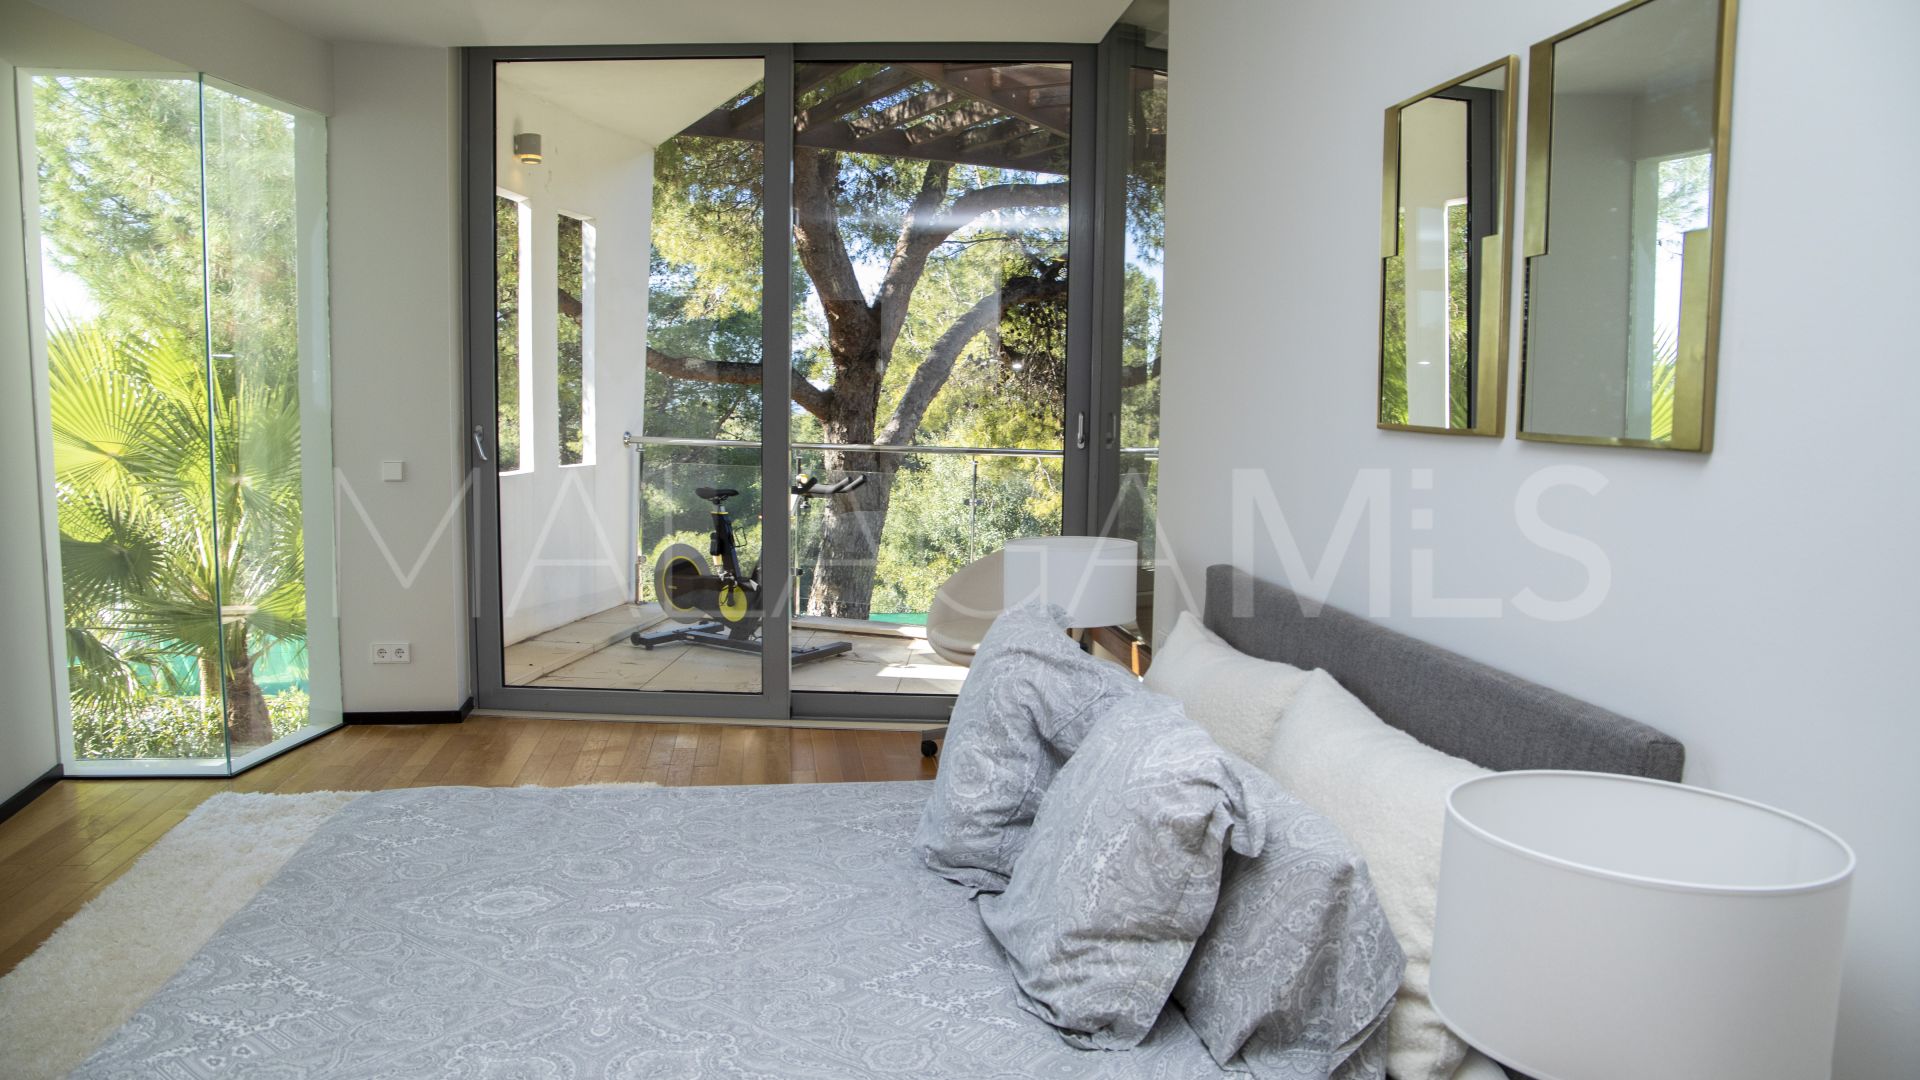 2 bedrooms Meisho Hills semi detached villa for sale